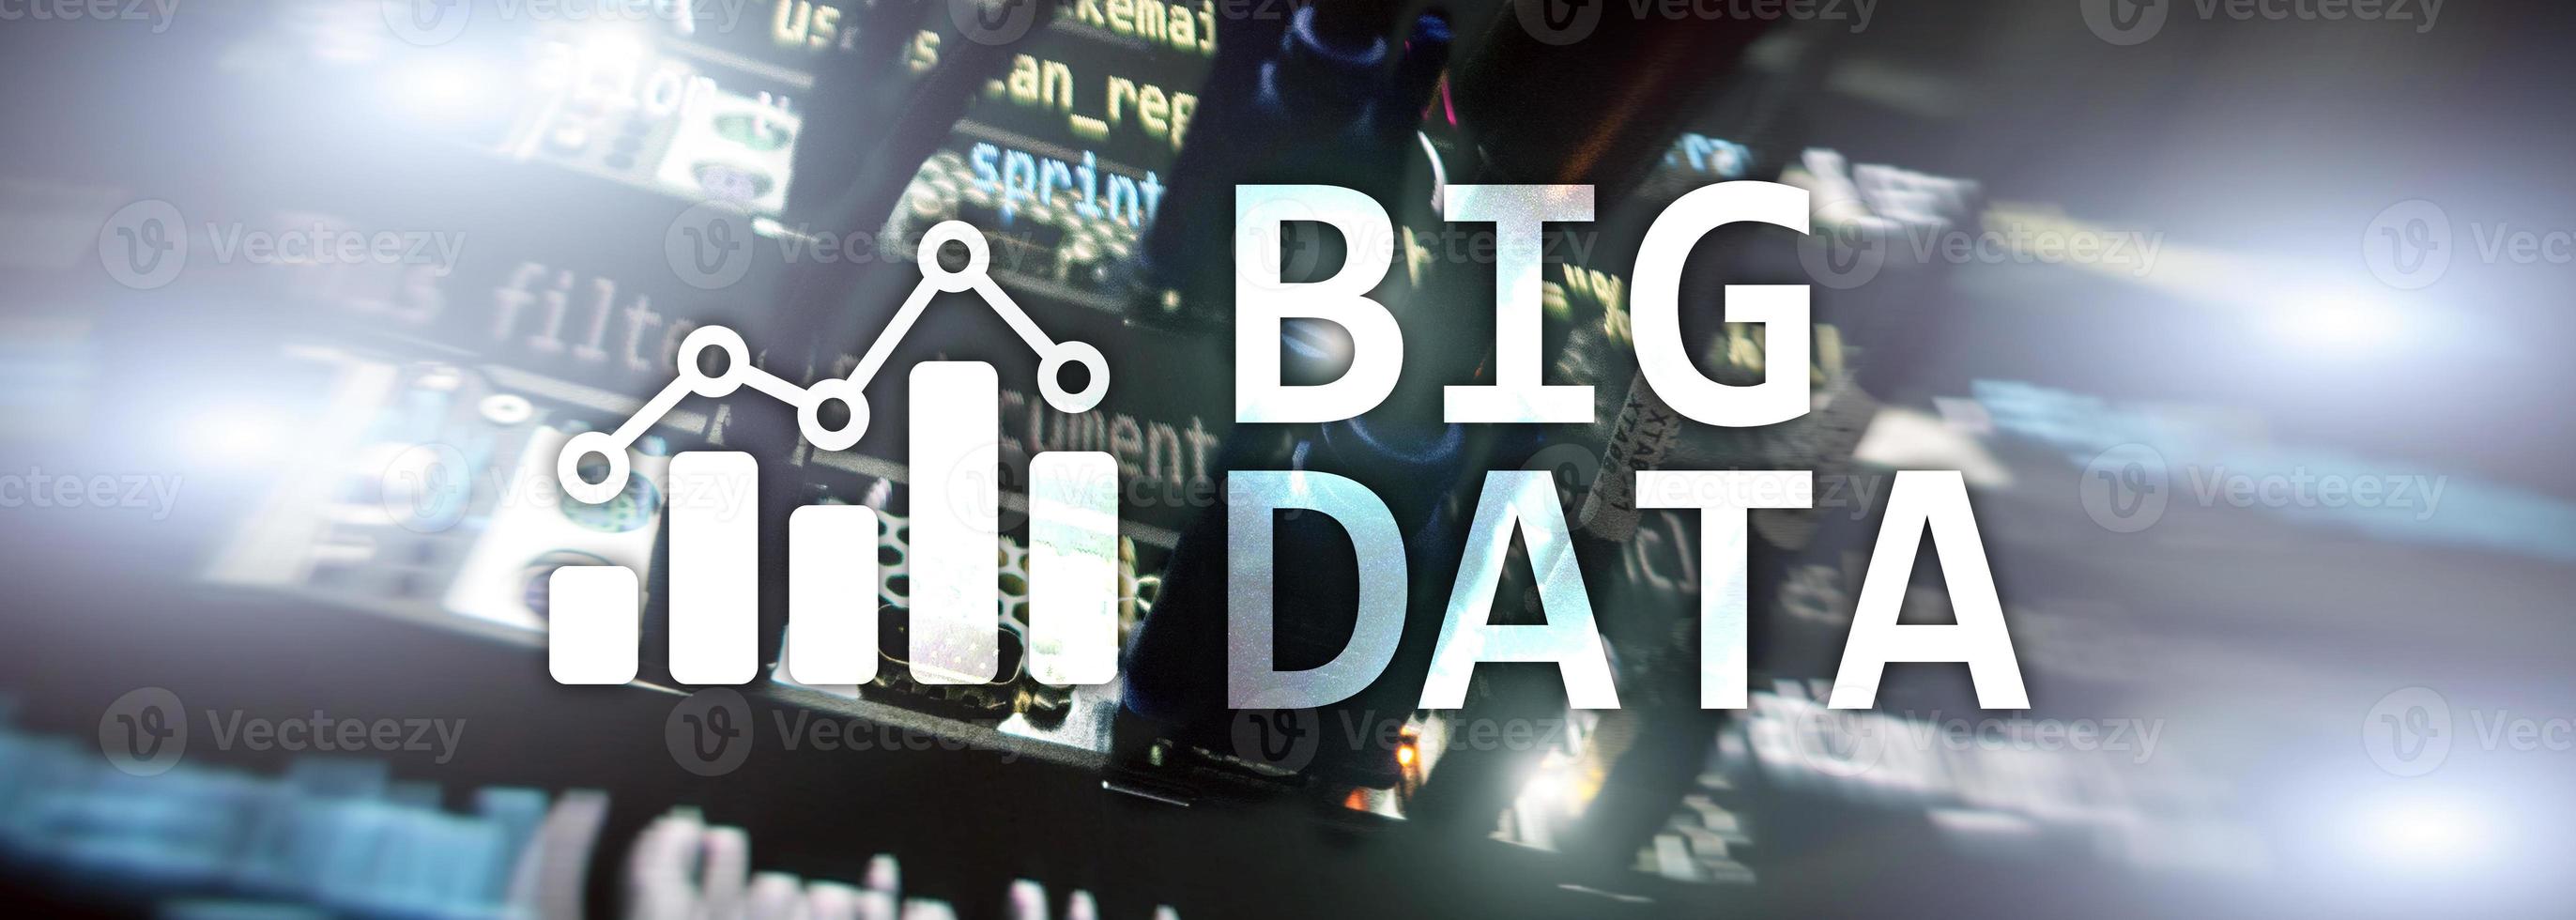 Big-Data-Analyseserver. Internet und Technik. foto